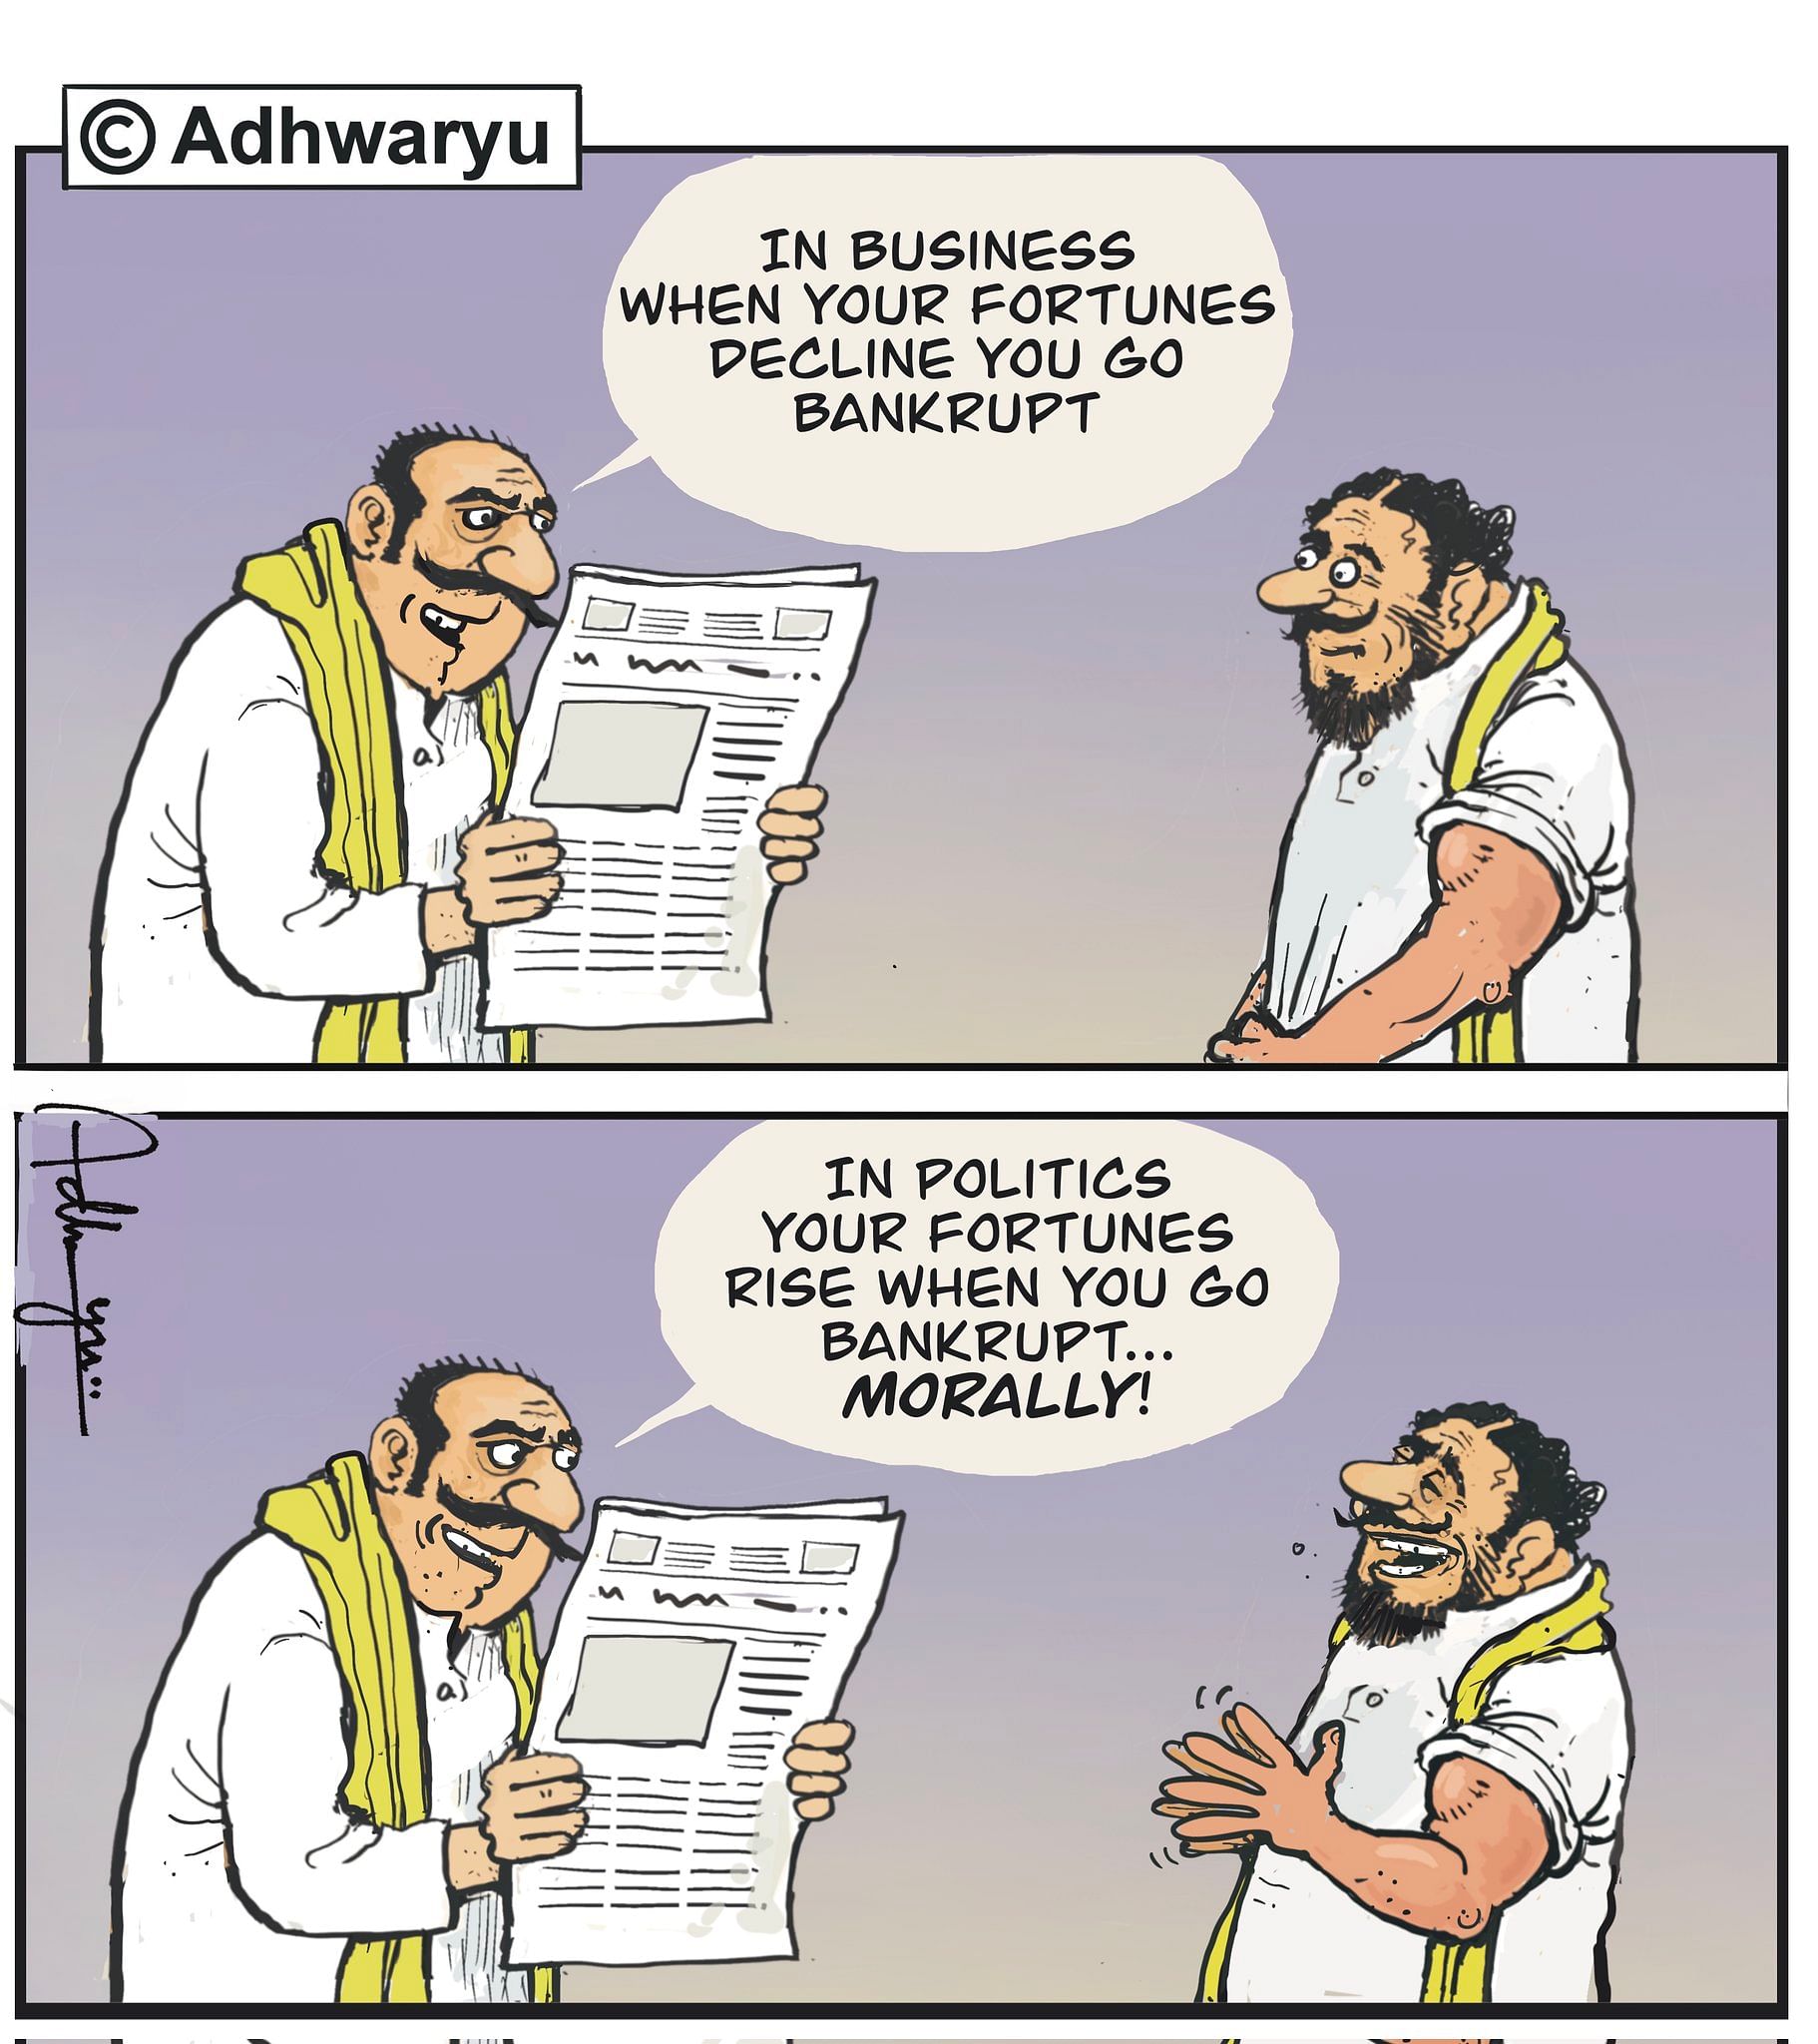 Sandeep Adhwaryu | X (formerly Twitter) /@CartoonistSan